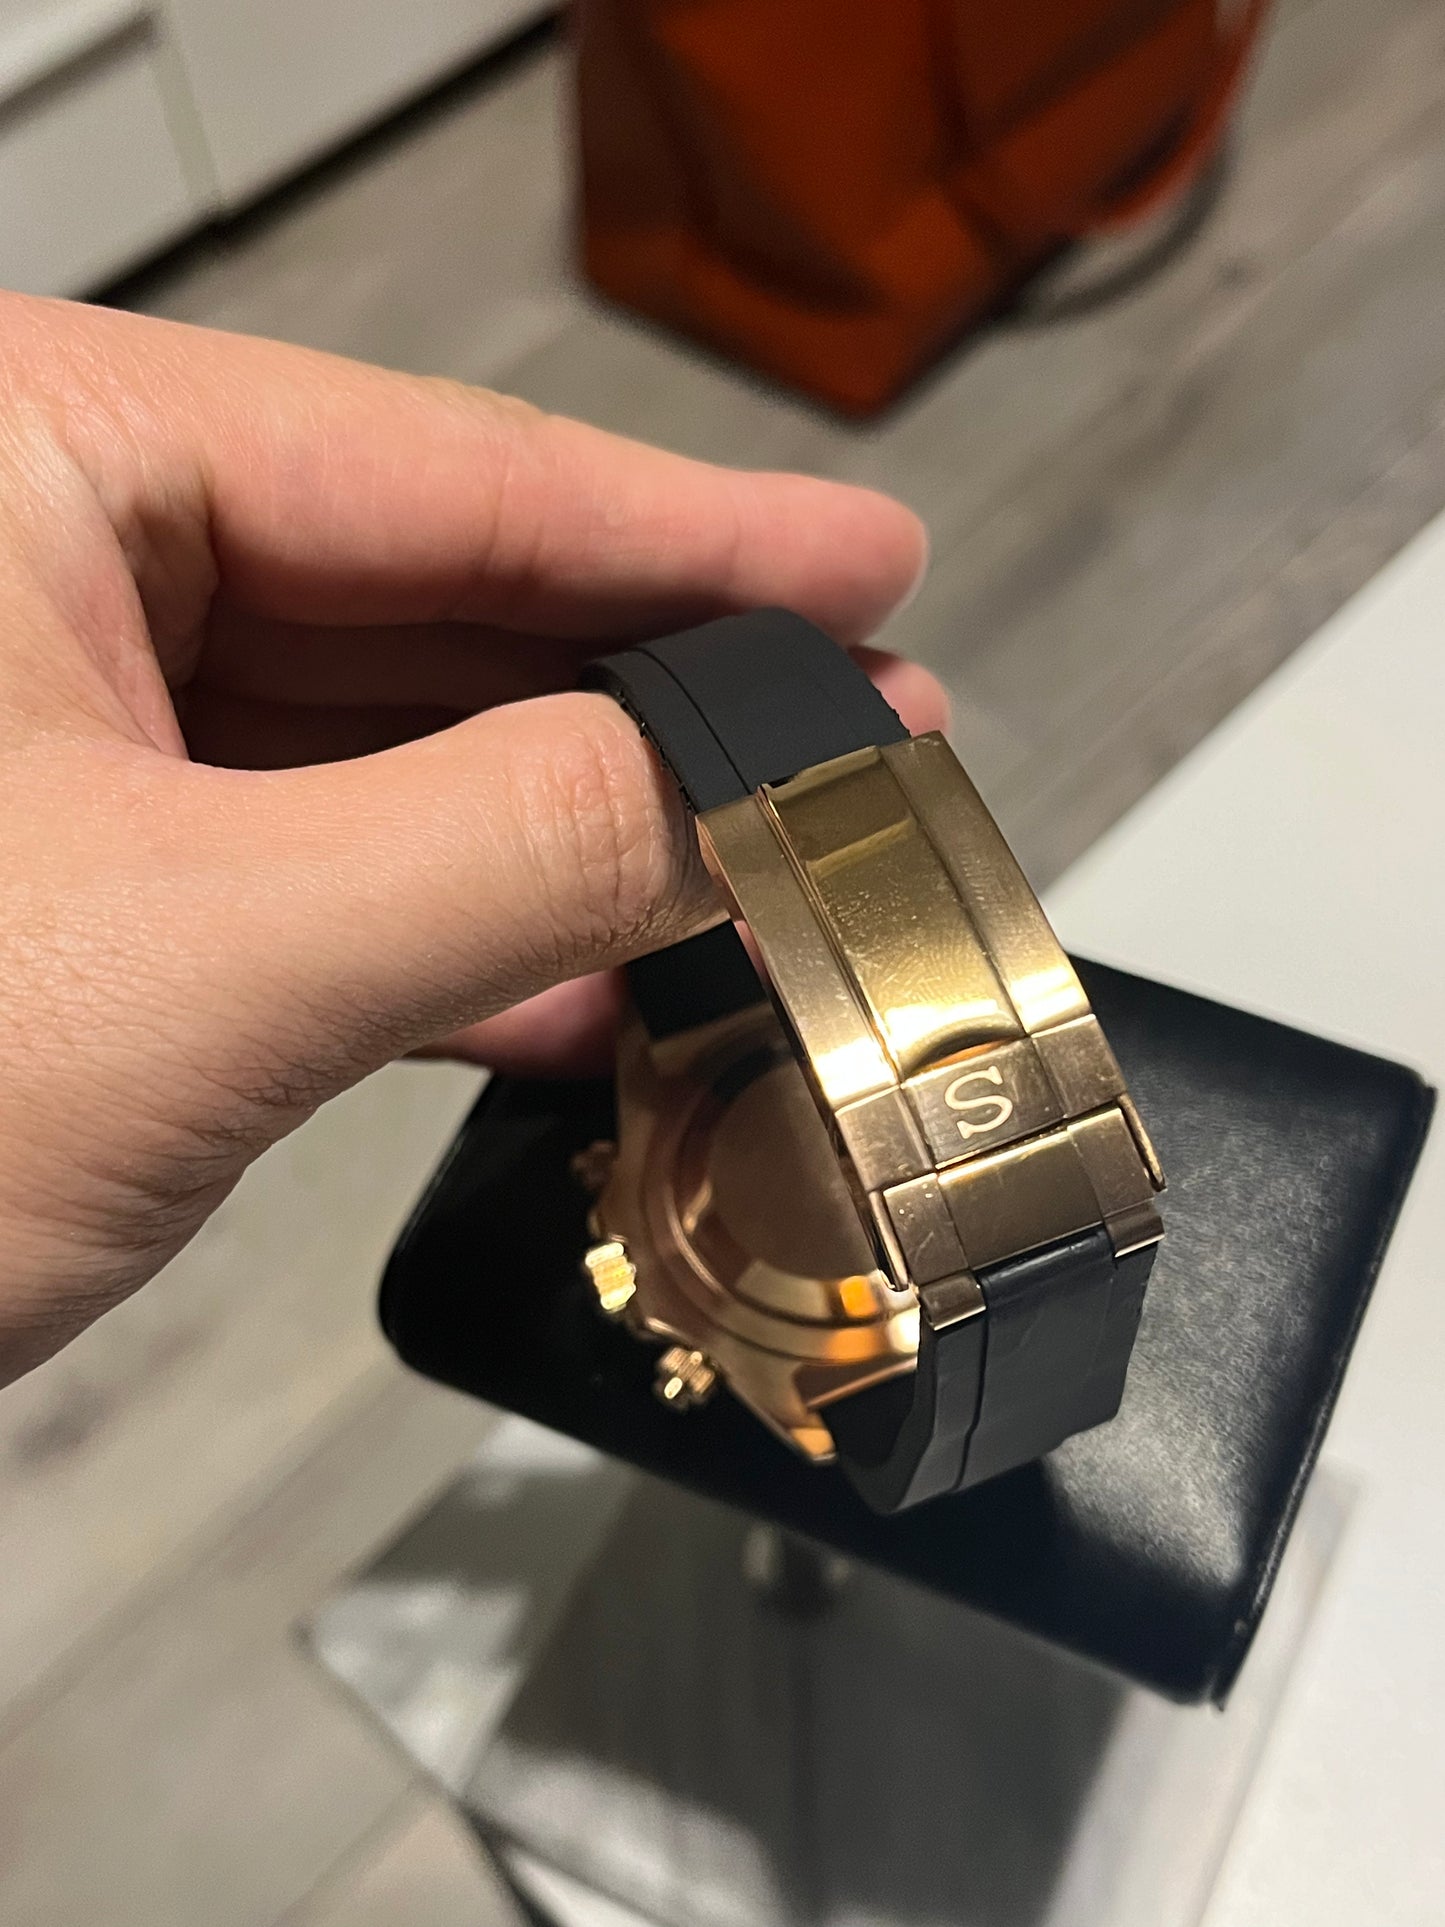 Seiko mod - custom gold meteorite Daytona with rubber strap mega-quartz VK63 movement watch